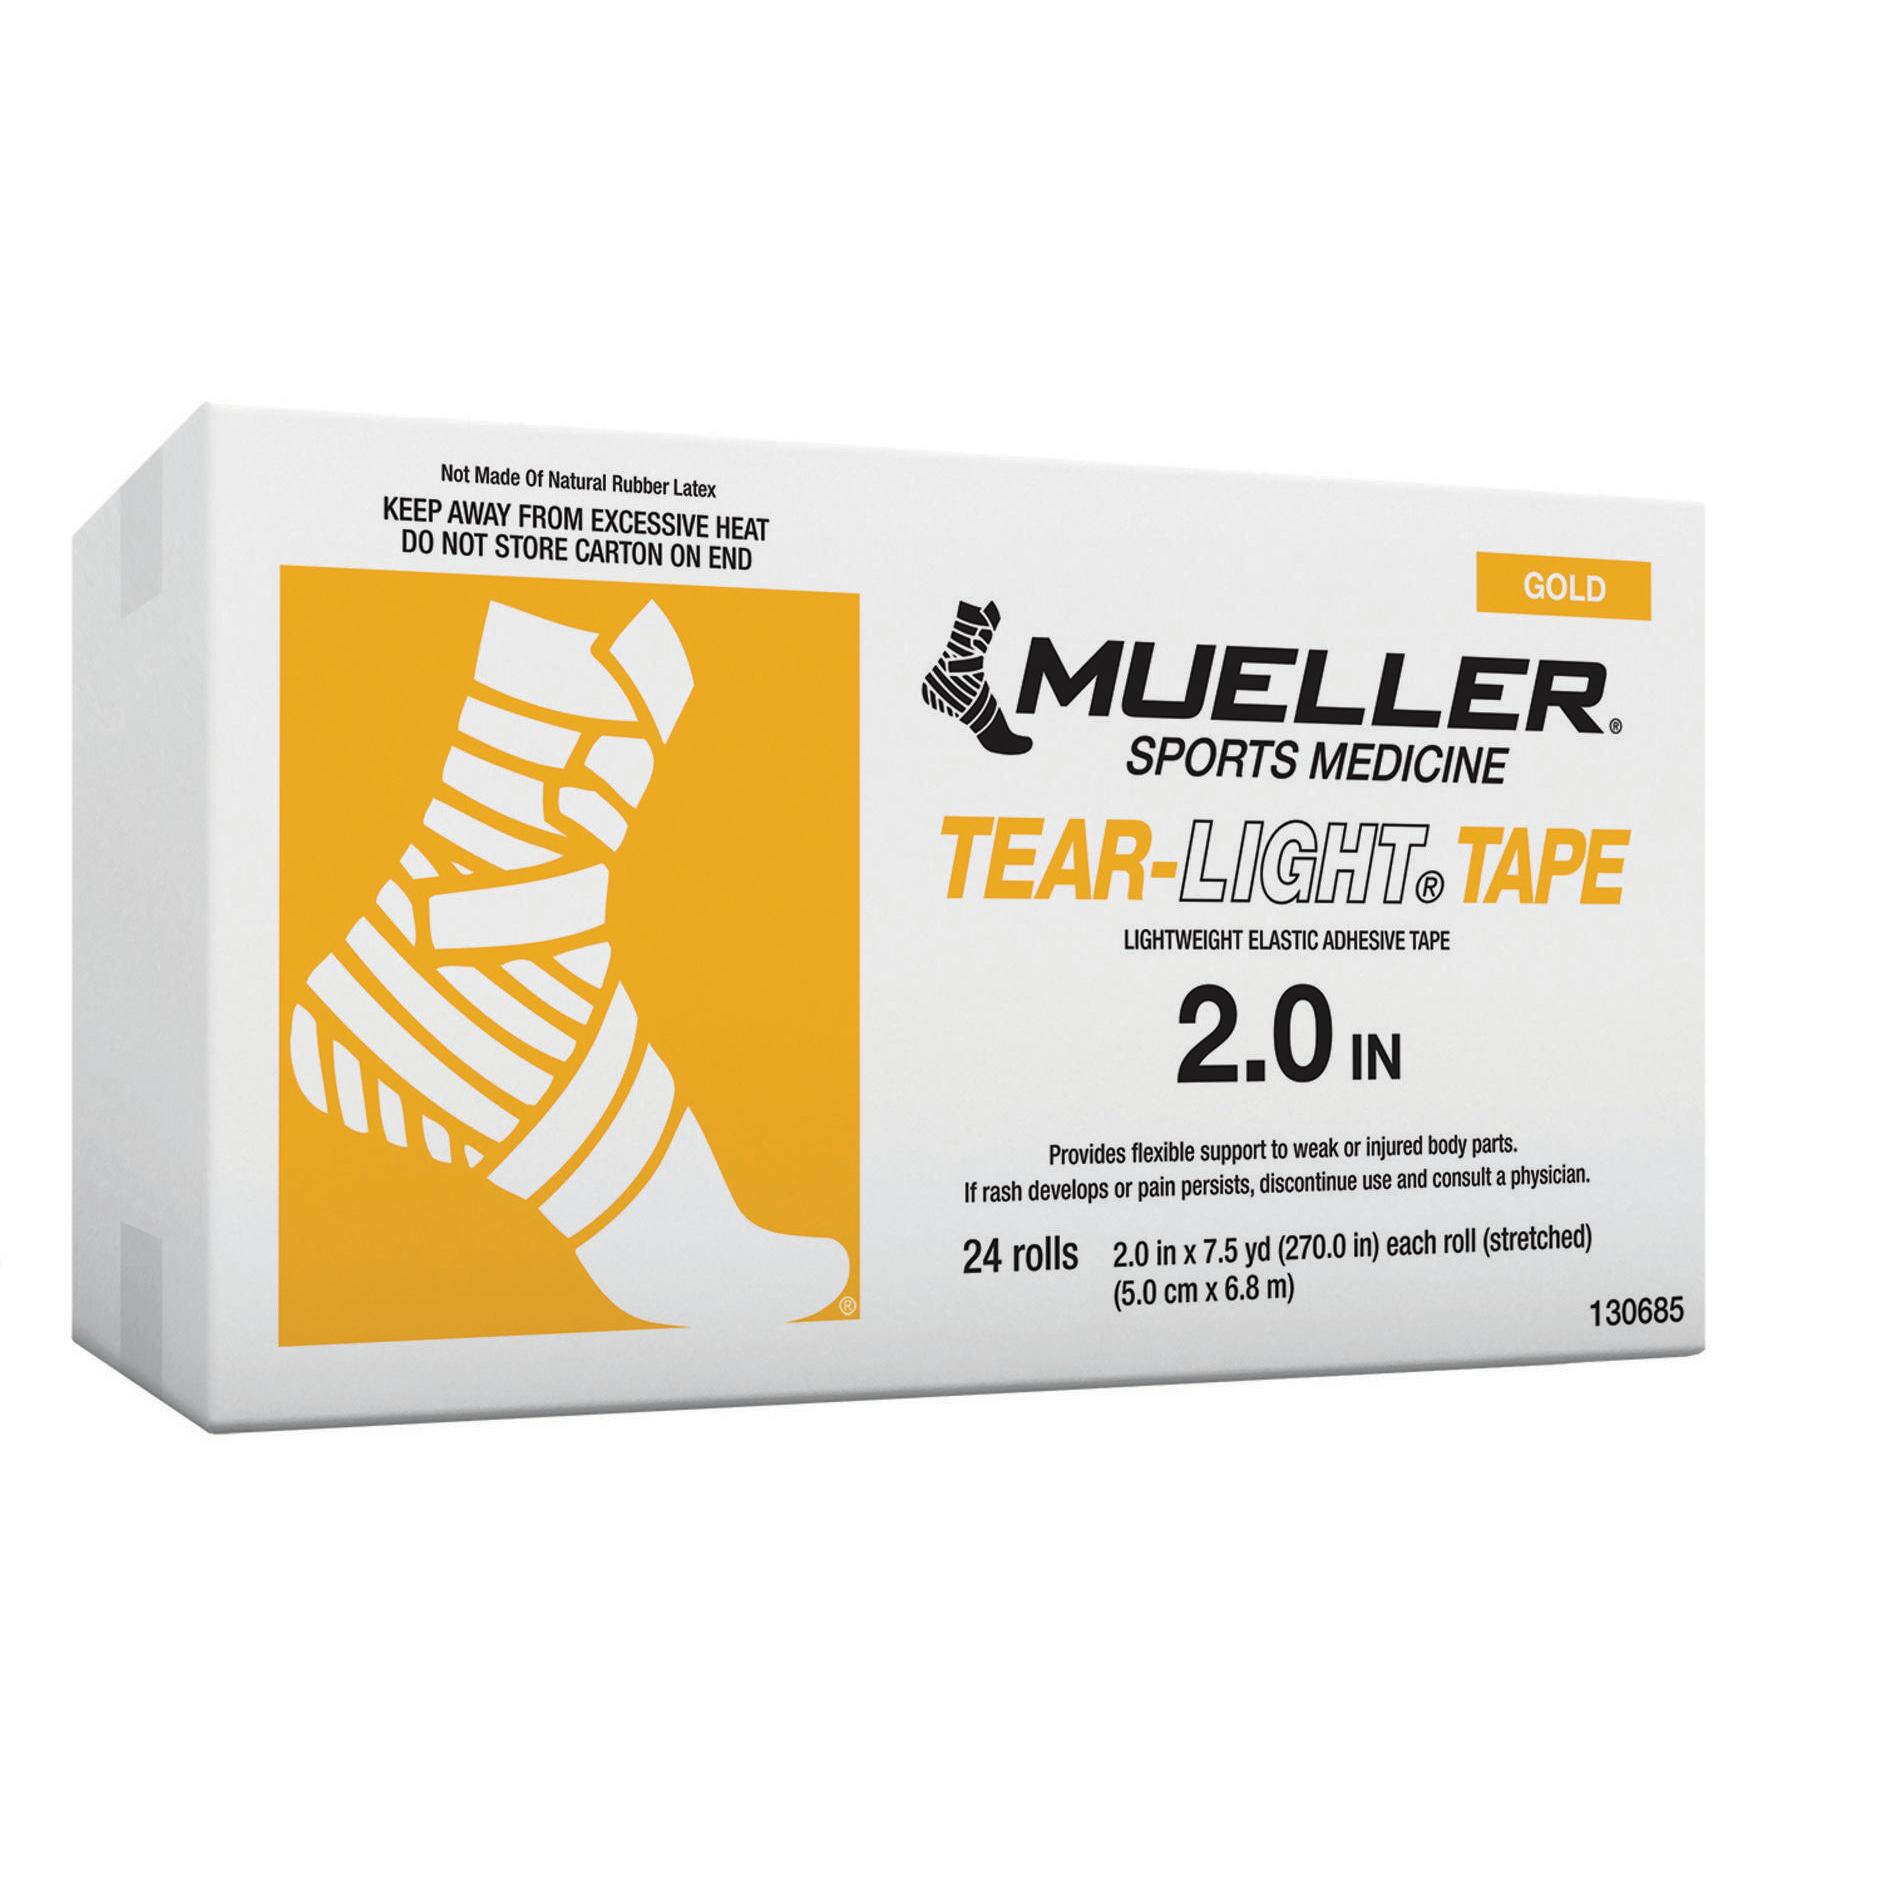 Mueller Muscle Support Tear-Light Tape Gold 5cm x 6.8m - 24 Rolls 2/3